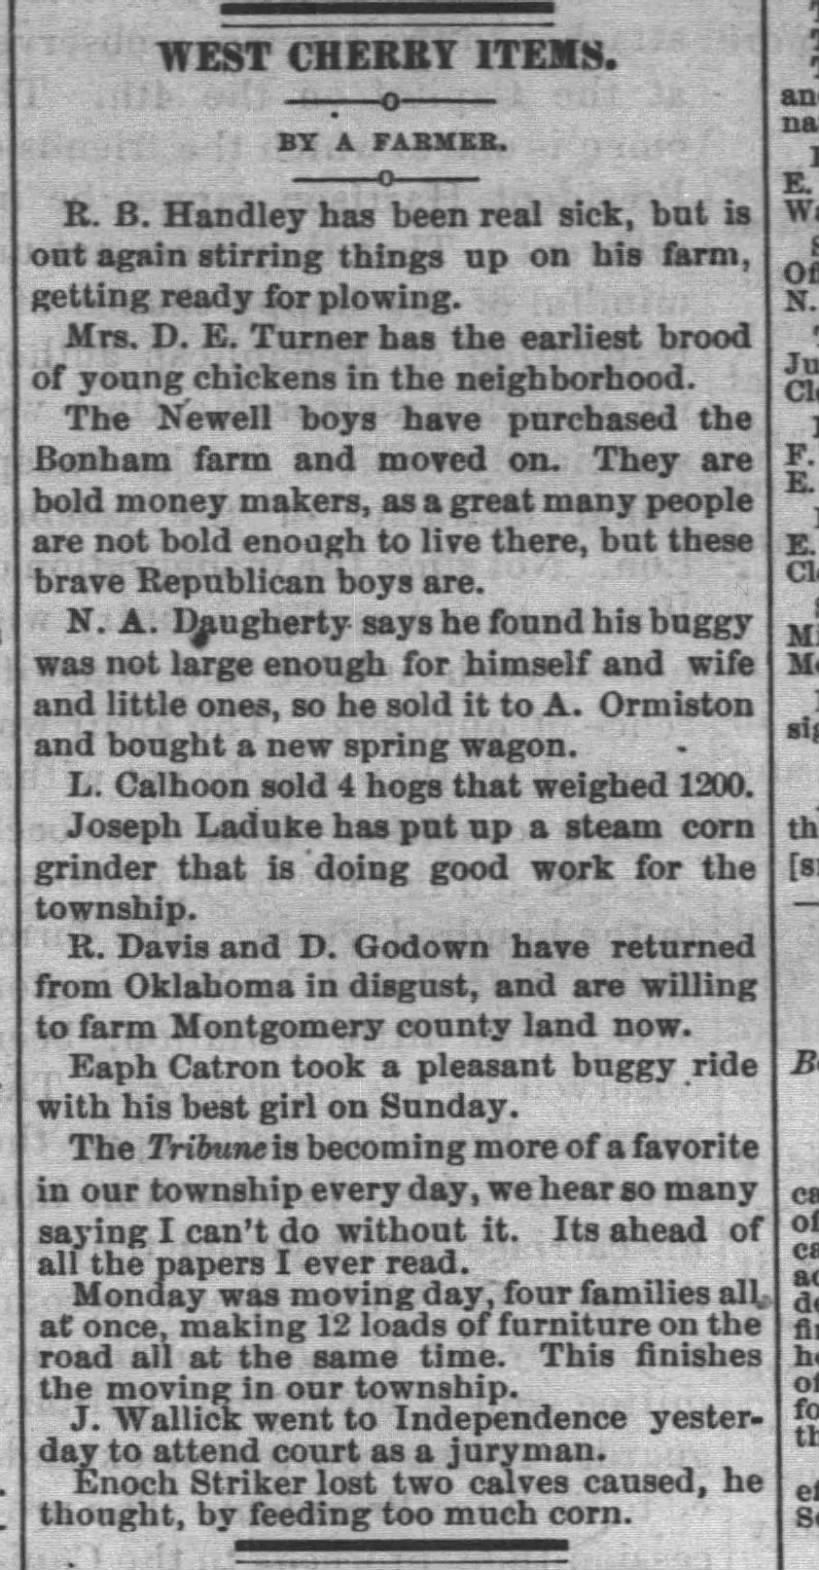 South Kansas Tribune (Independence, Kansas) 13 Mar 1889